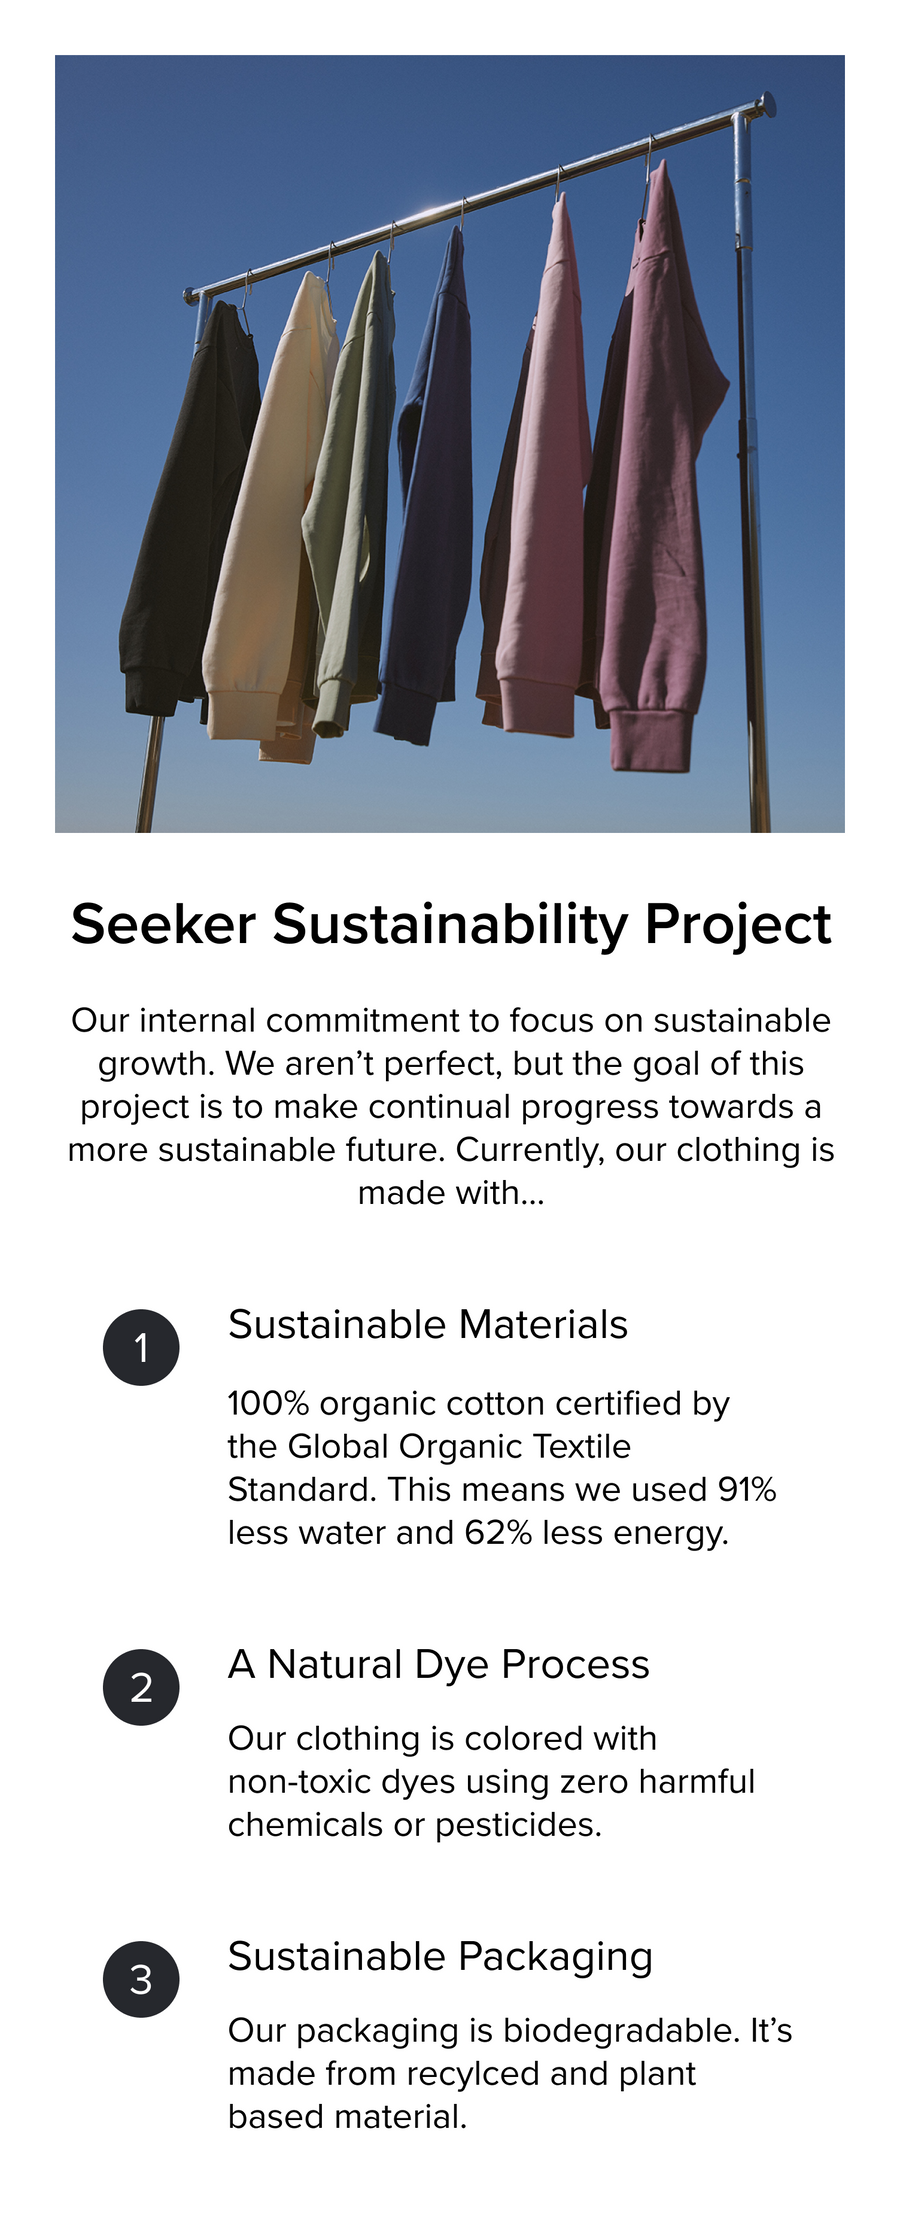 Image Sustainability Project